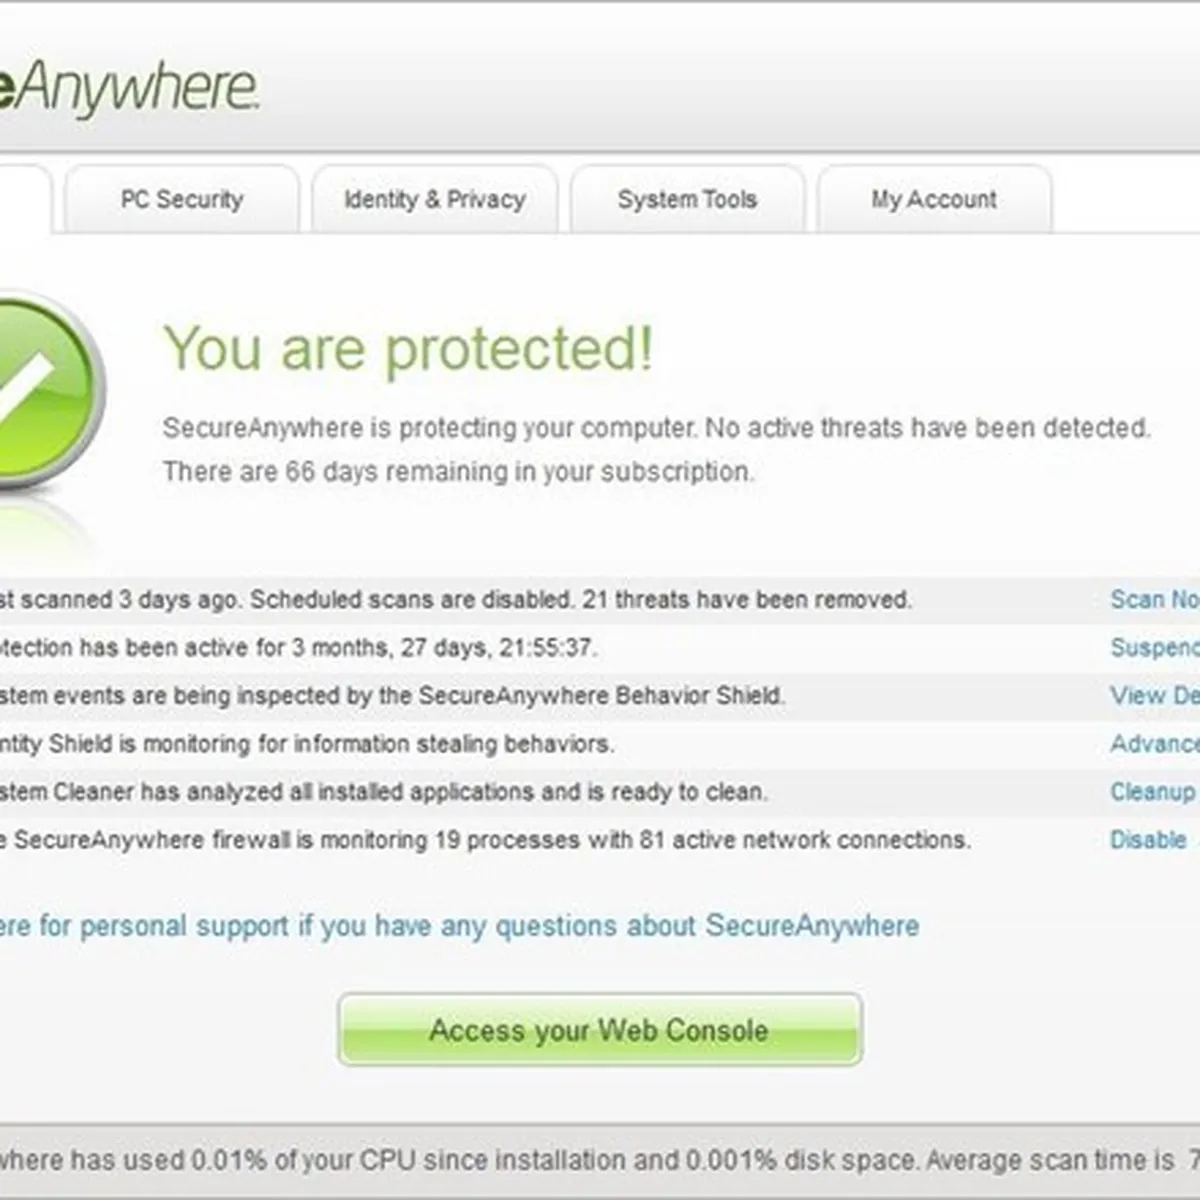 Webroot SecureAnywhere Antivirus Review